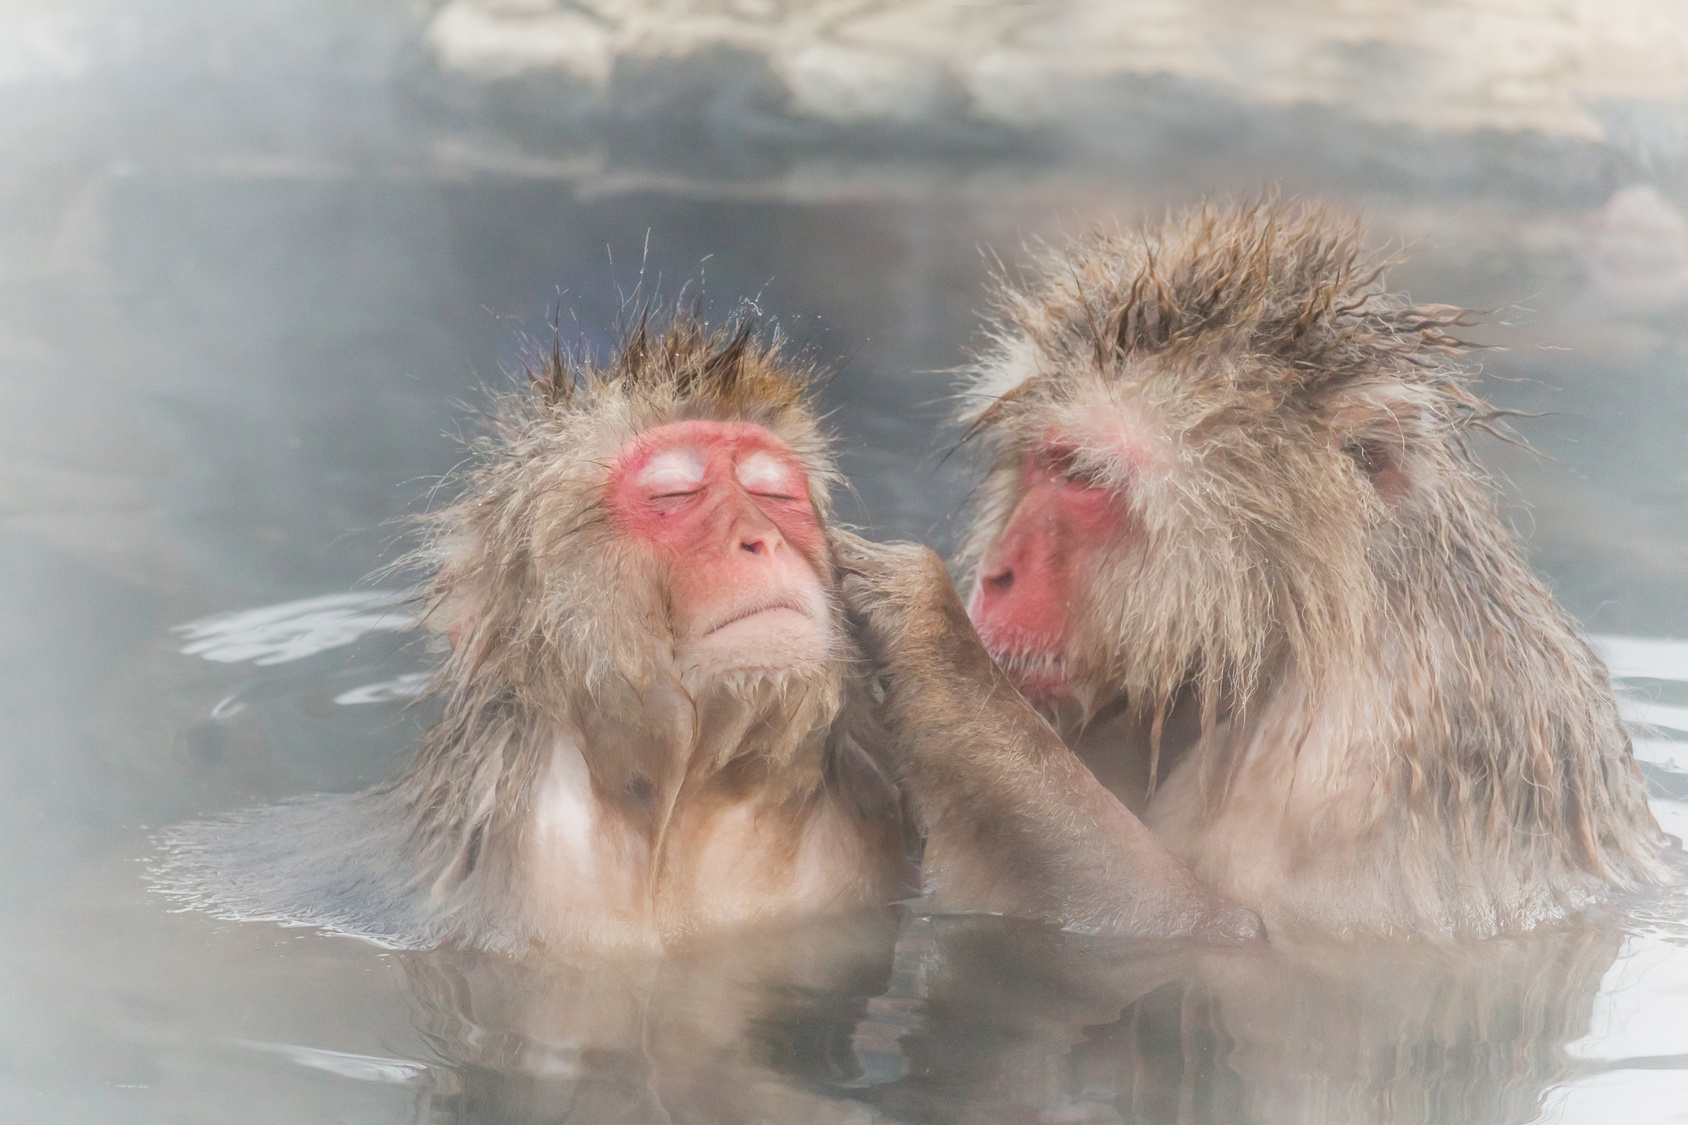 monkey couple of the outdoor bath